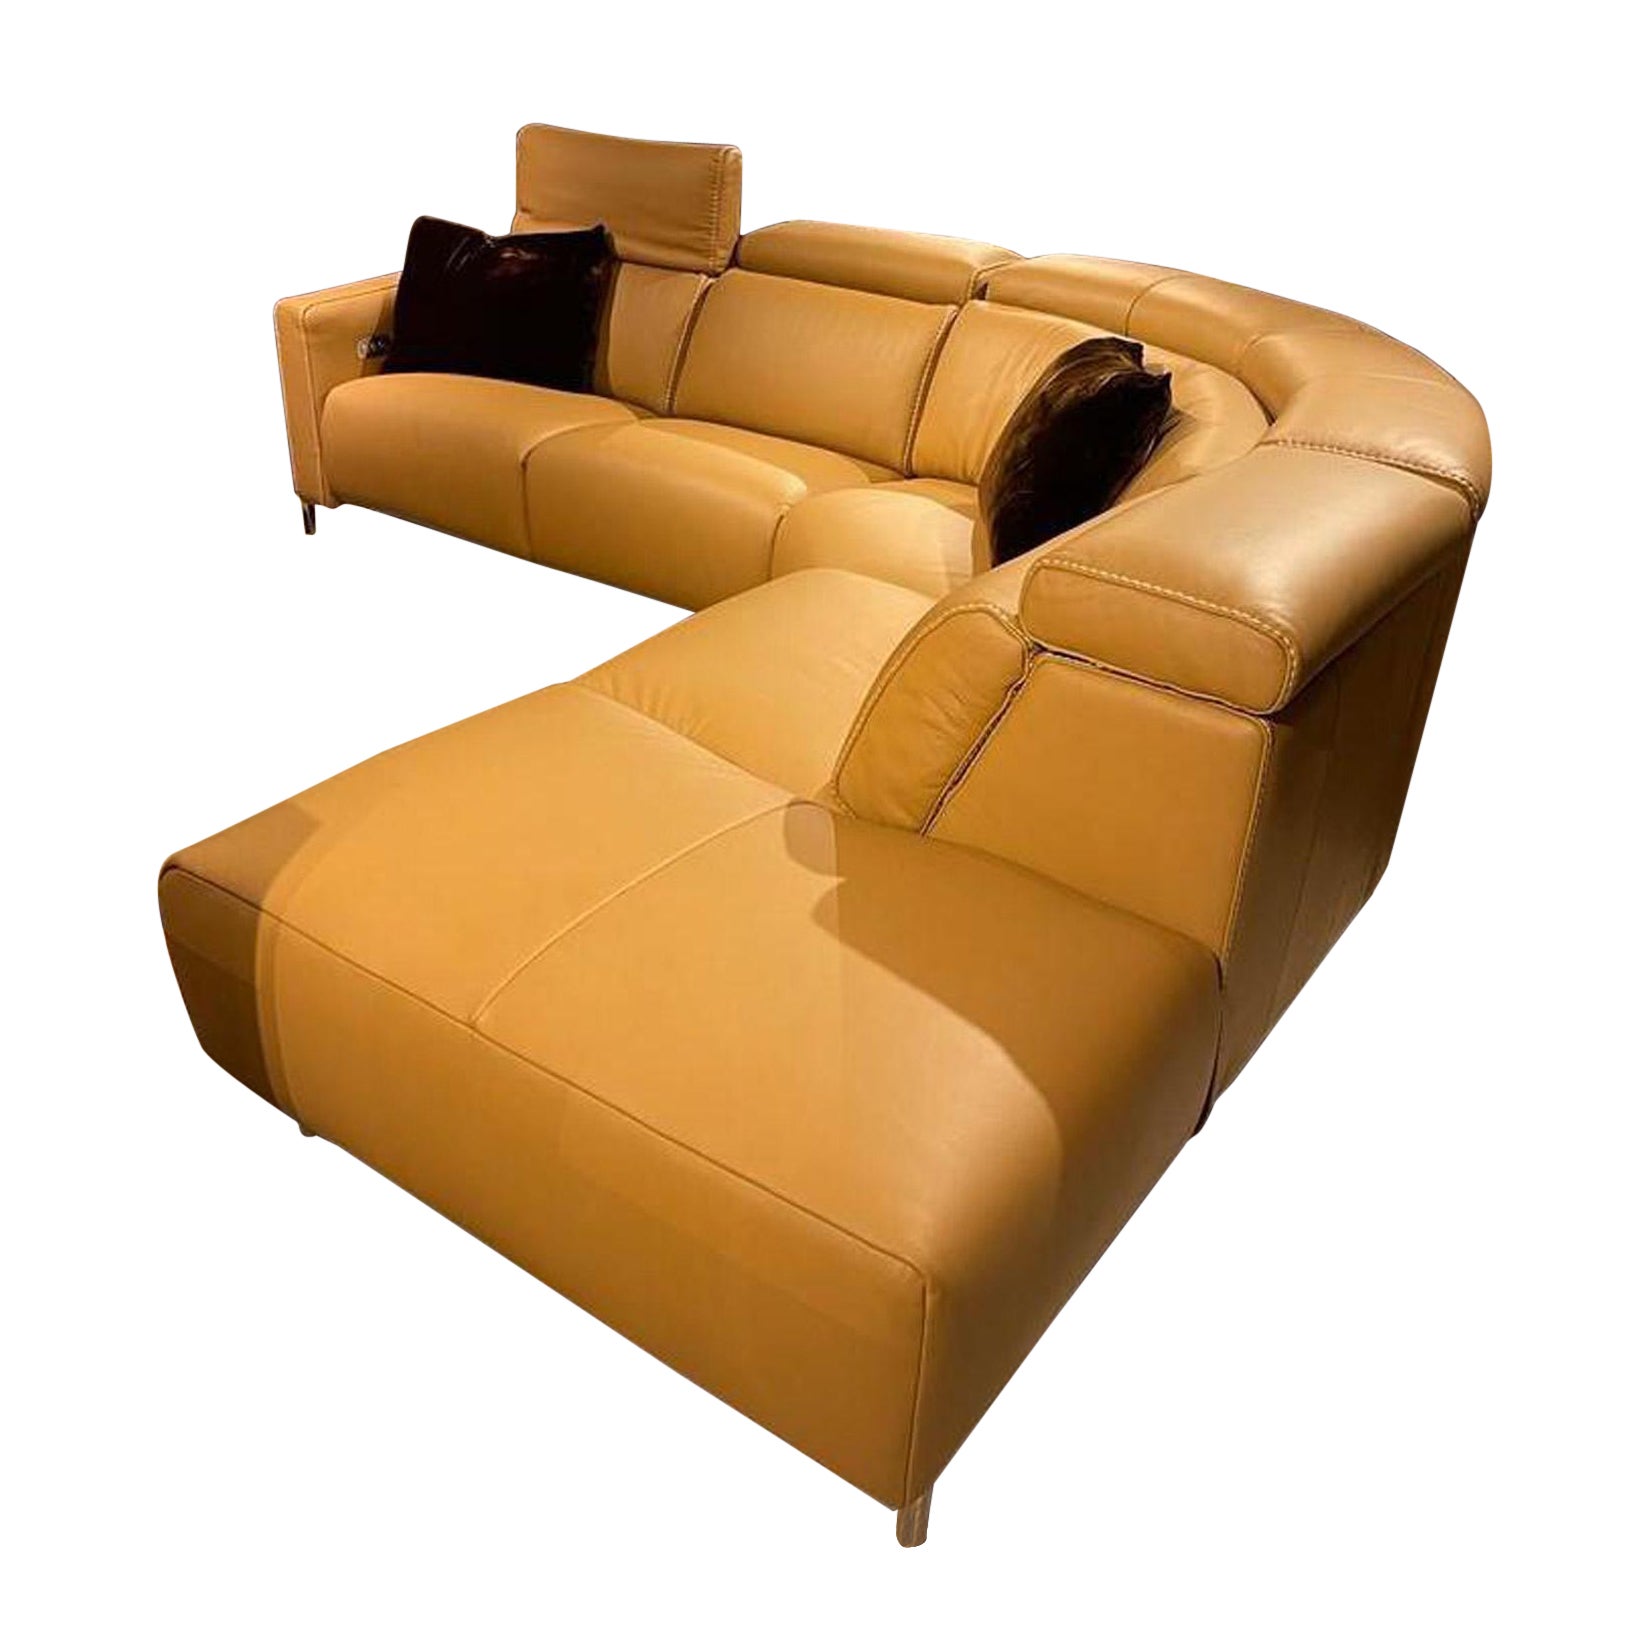 Fellini Italian Leather Sectional Sofa with 3 Reclining Seats